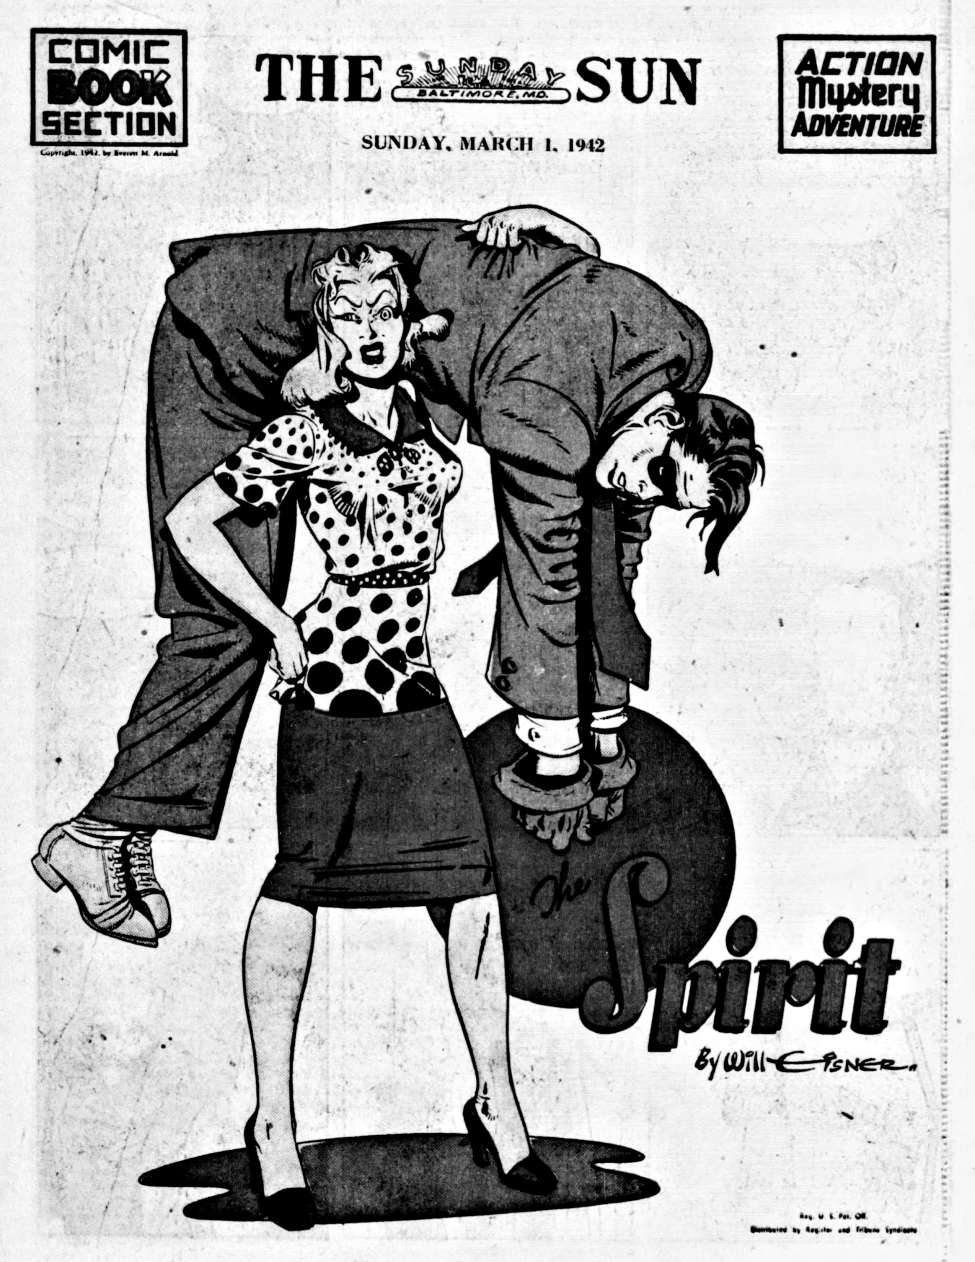 Comic Book Cover For The Spirit (1942-03-01) - Baltimore Sun (b/w)